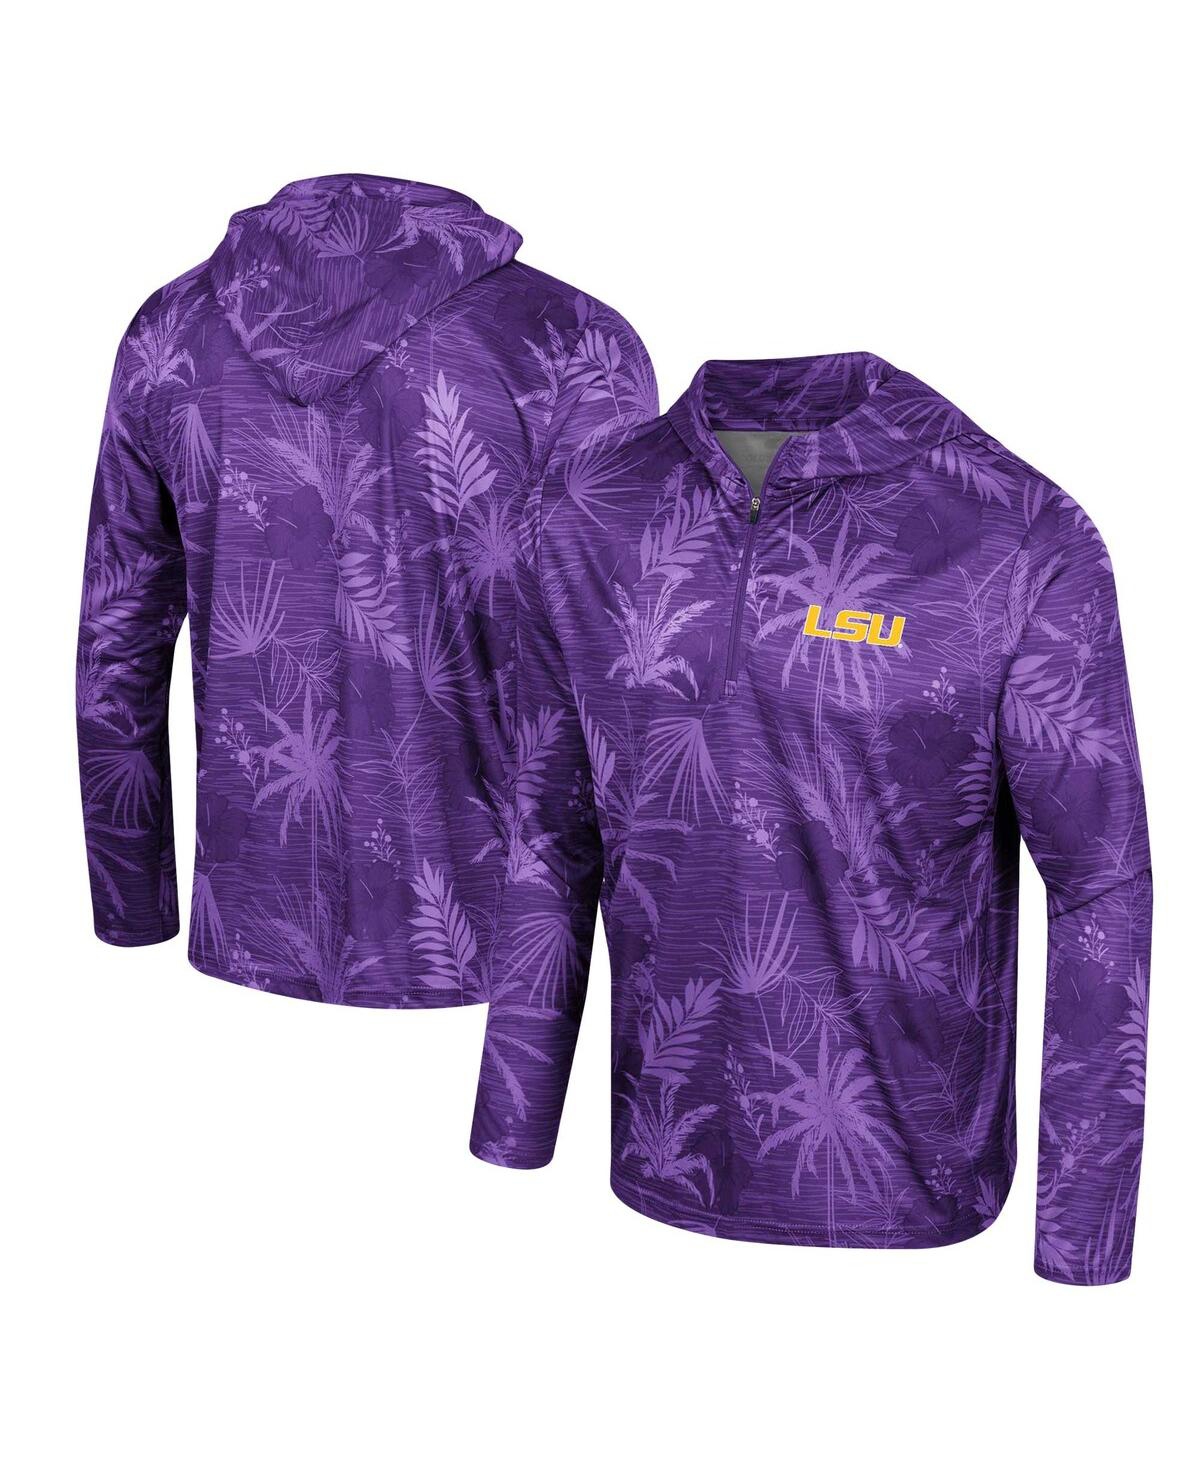 Men's Colosseum Purple Lsu Tigers Palms Printed Lightweight Quarter-Zip Hooded Top - Purple